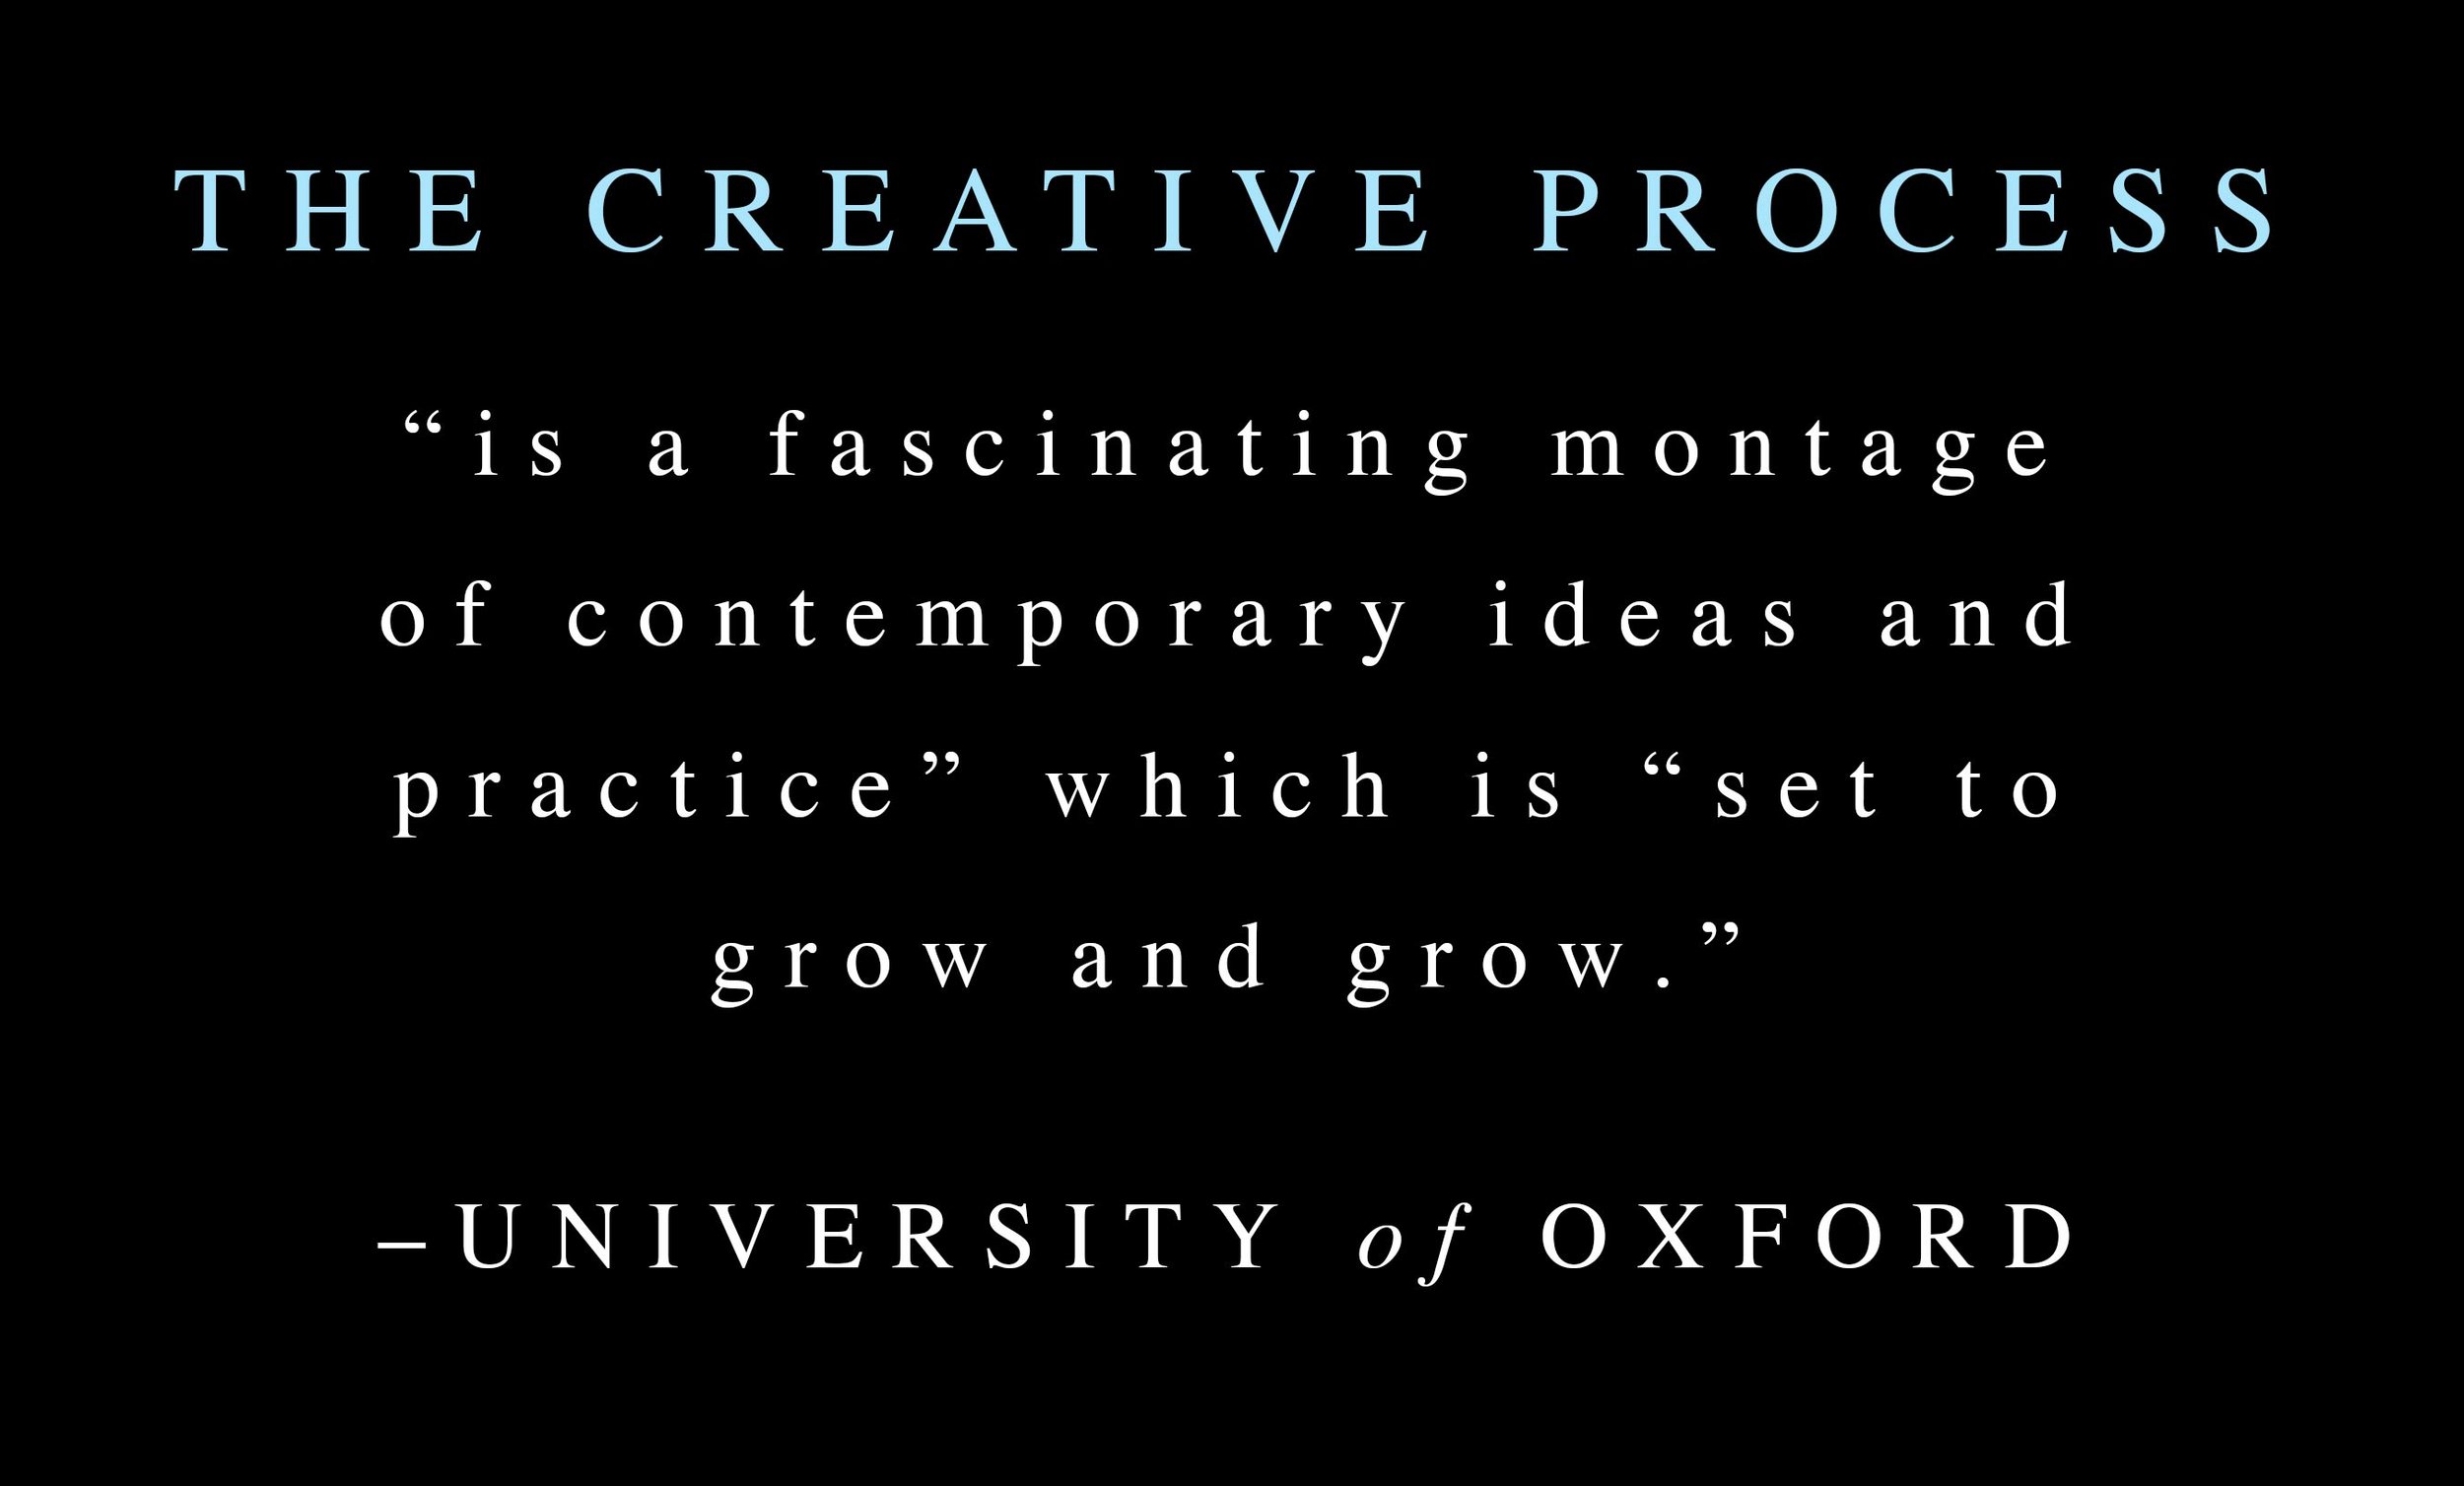 THE-CREATIVE-PROCESS-OXFORD.jpg